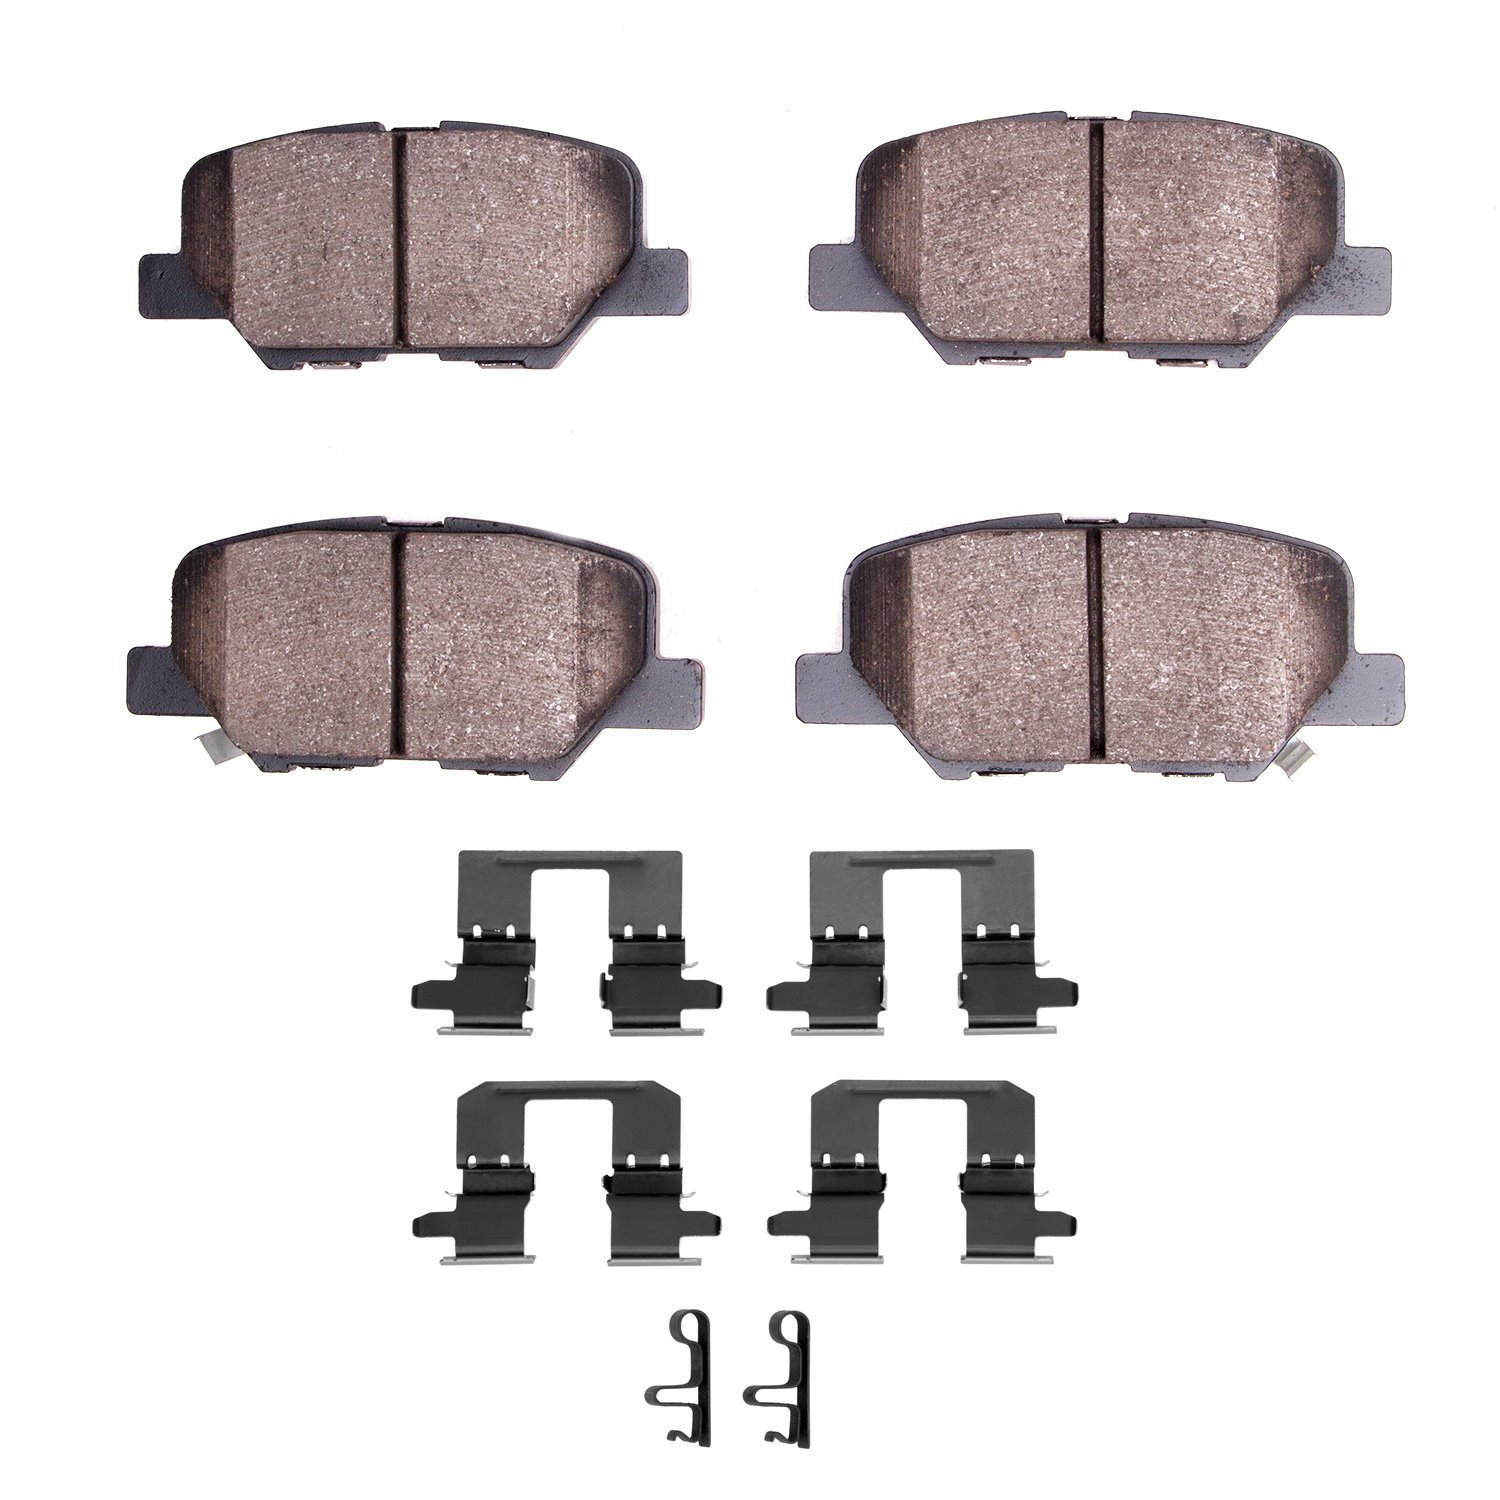 1311-1679-01 3000-Series Semi-Metallic Brake Pads & Hardware Kit, Fits Select Multiple Makes/Models, Position: Rear